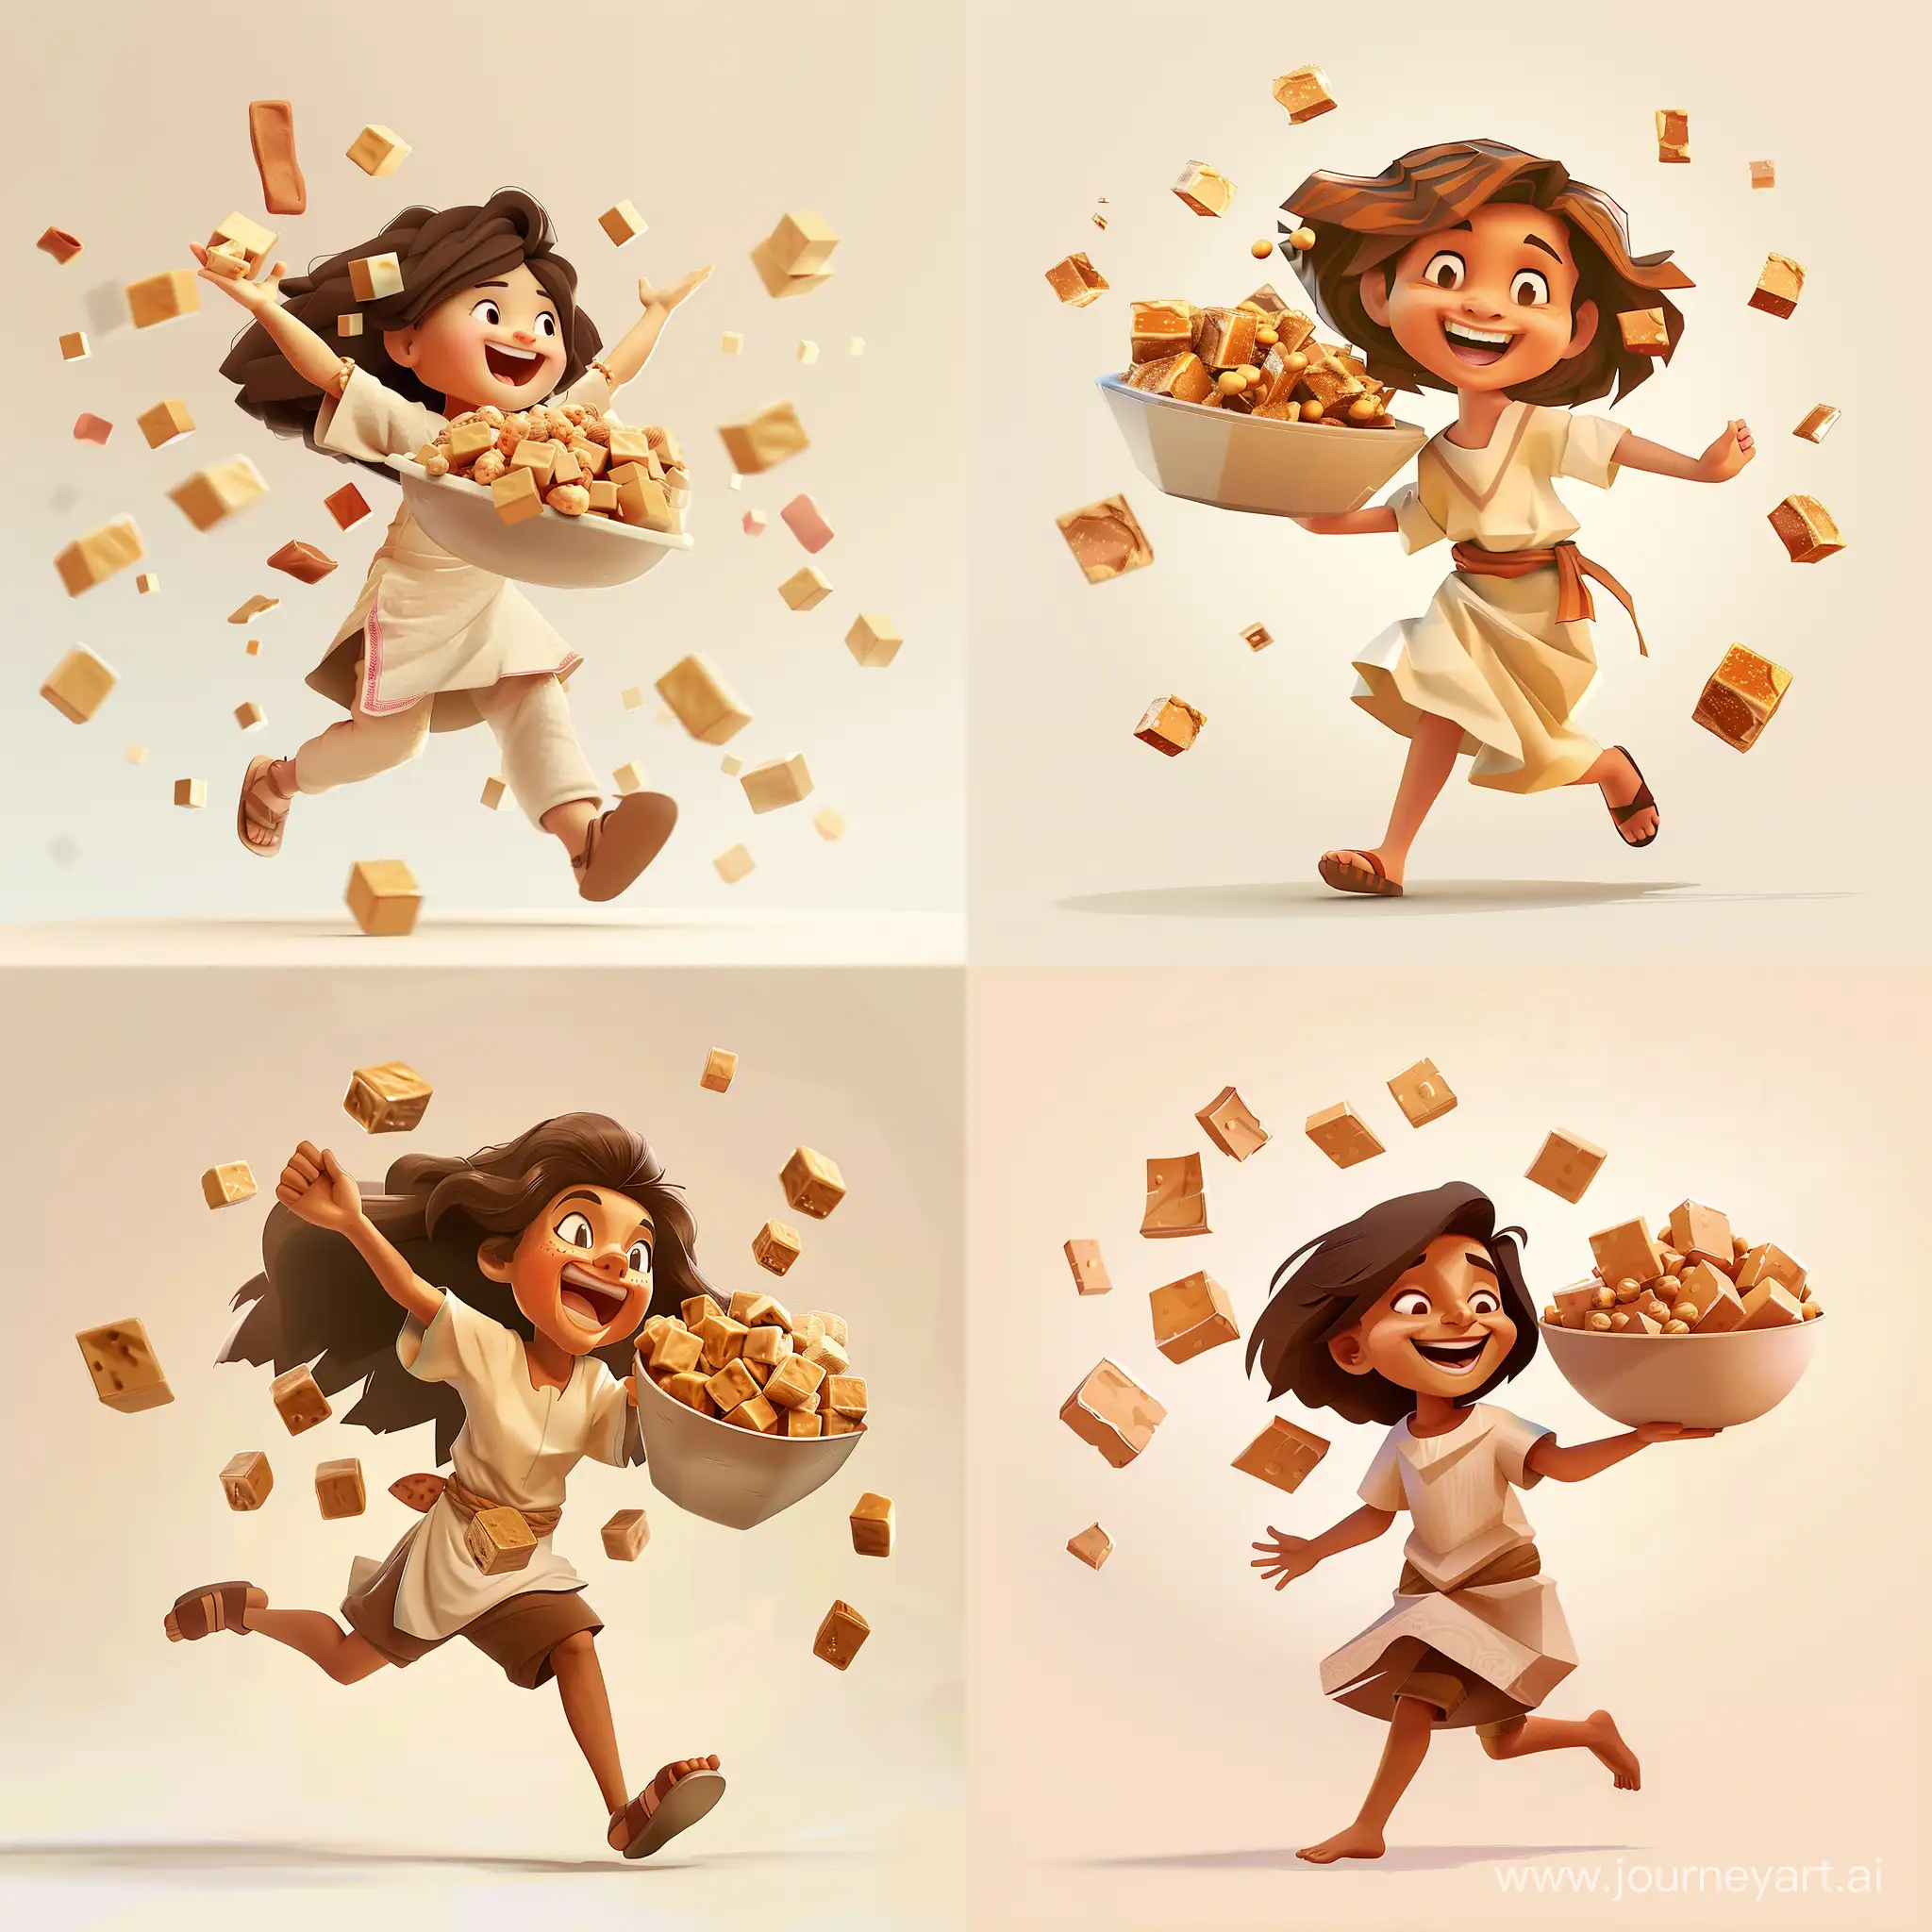 Joyful-Yemeni-Girl-Running-with-Rectangular-Toffee-Candy-Bowl